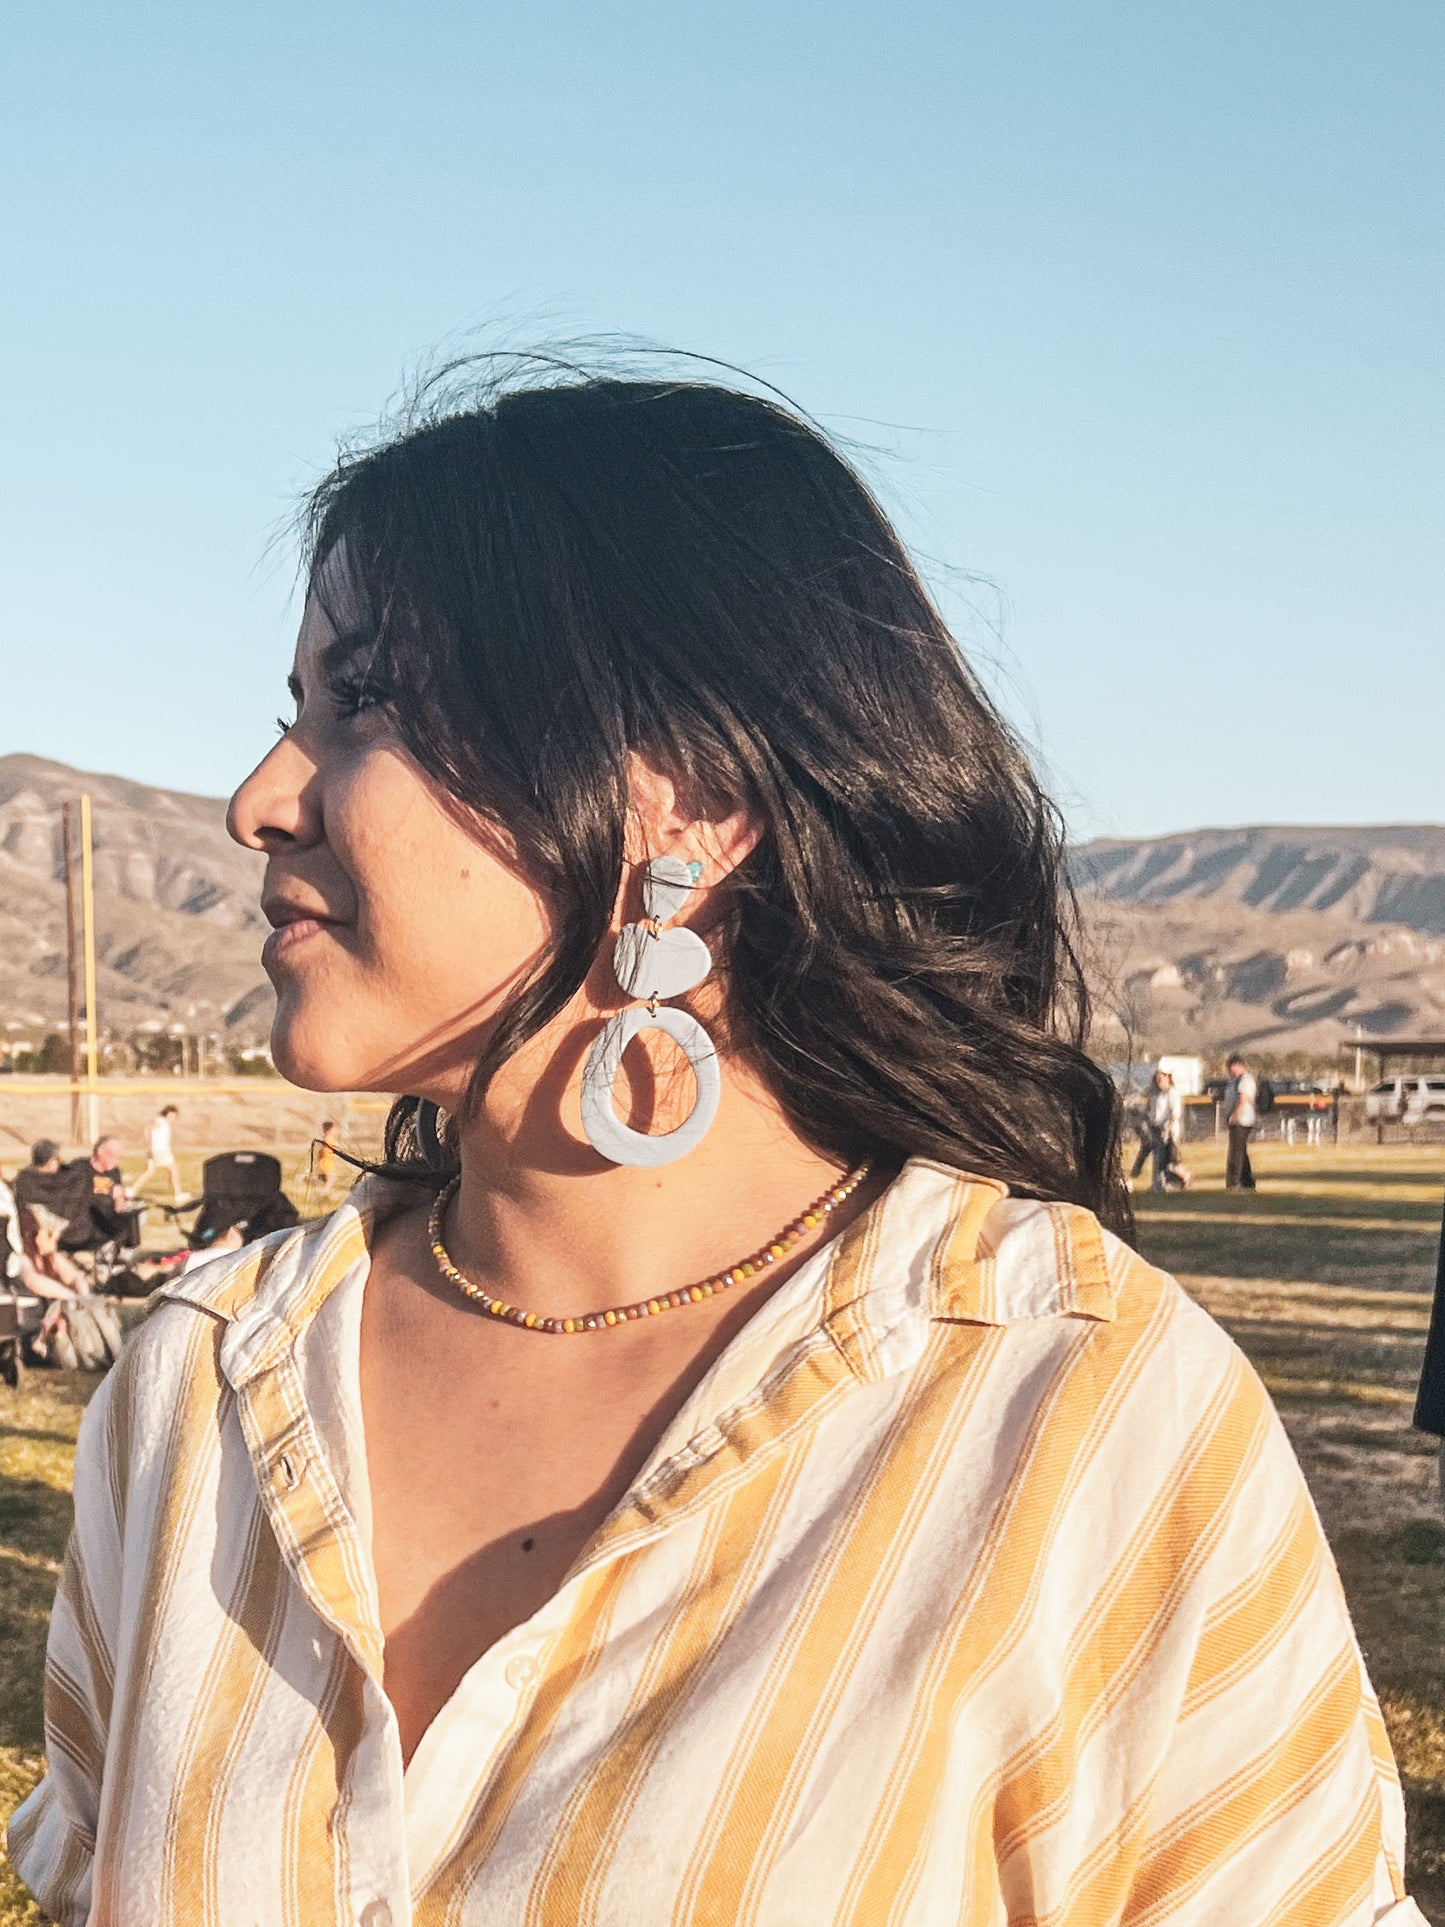 The Juno Earrings